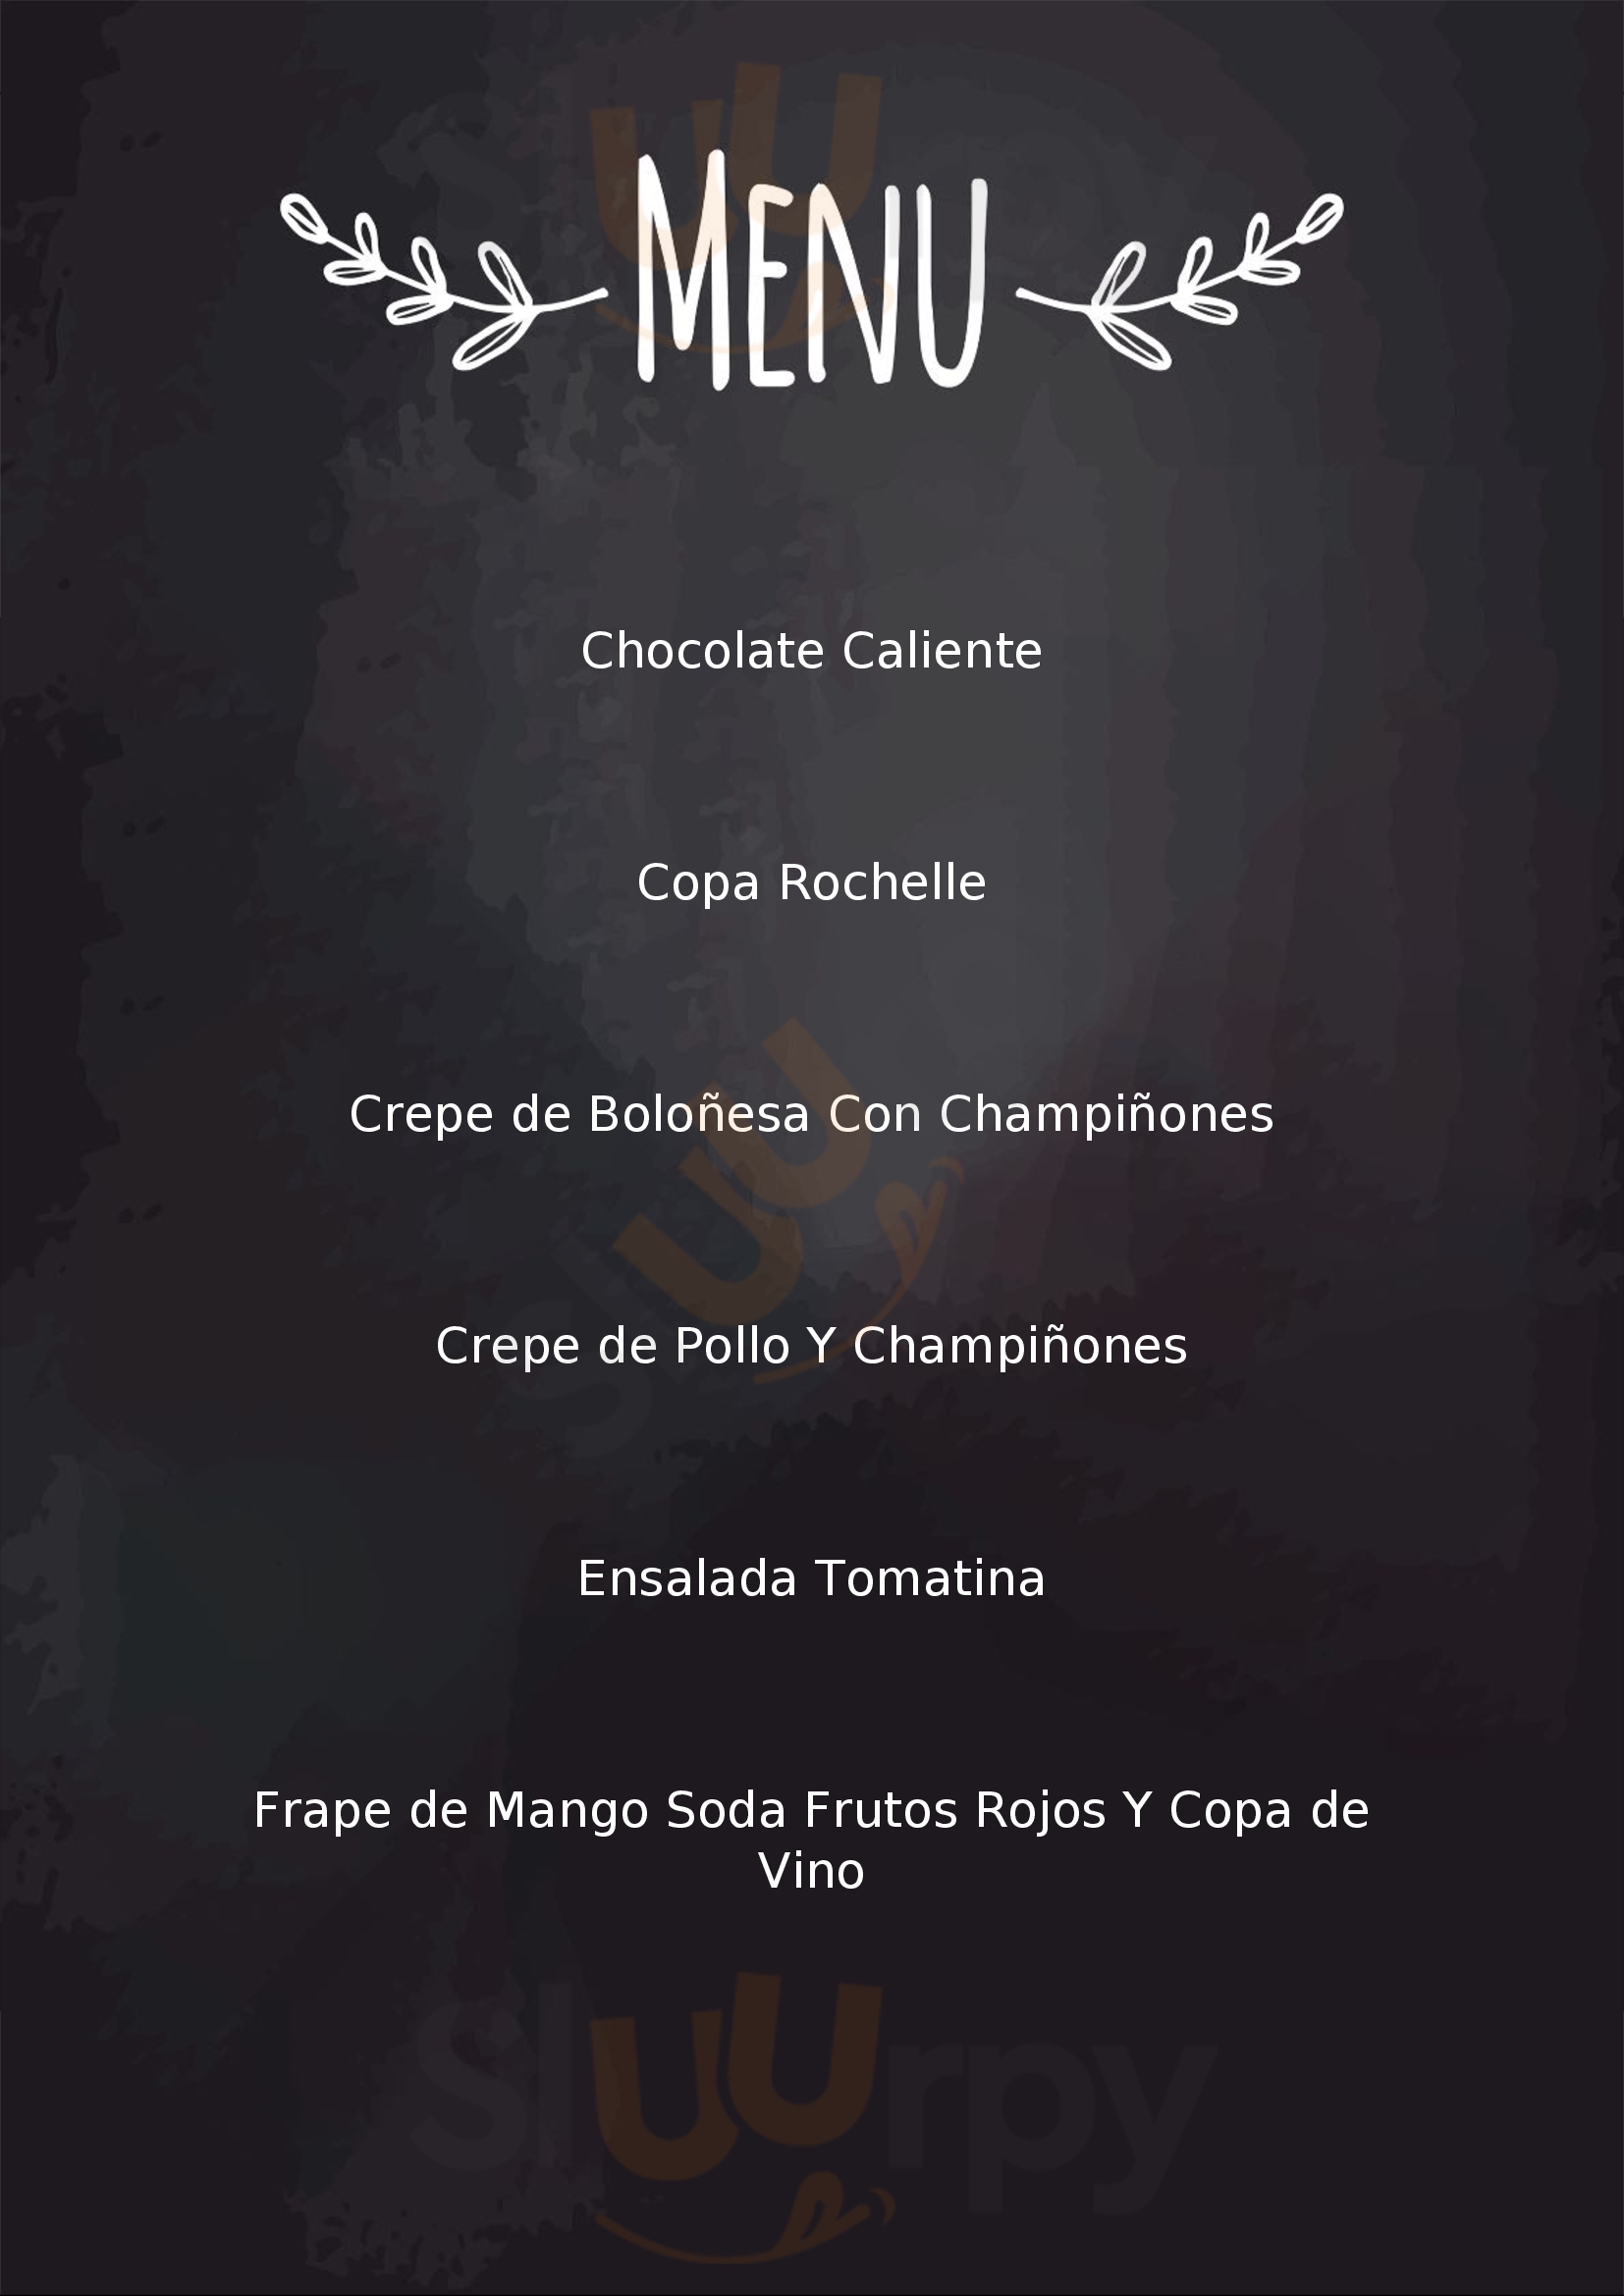 Crepes & Waffles Bogotá Menu - 1